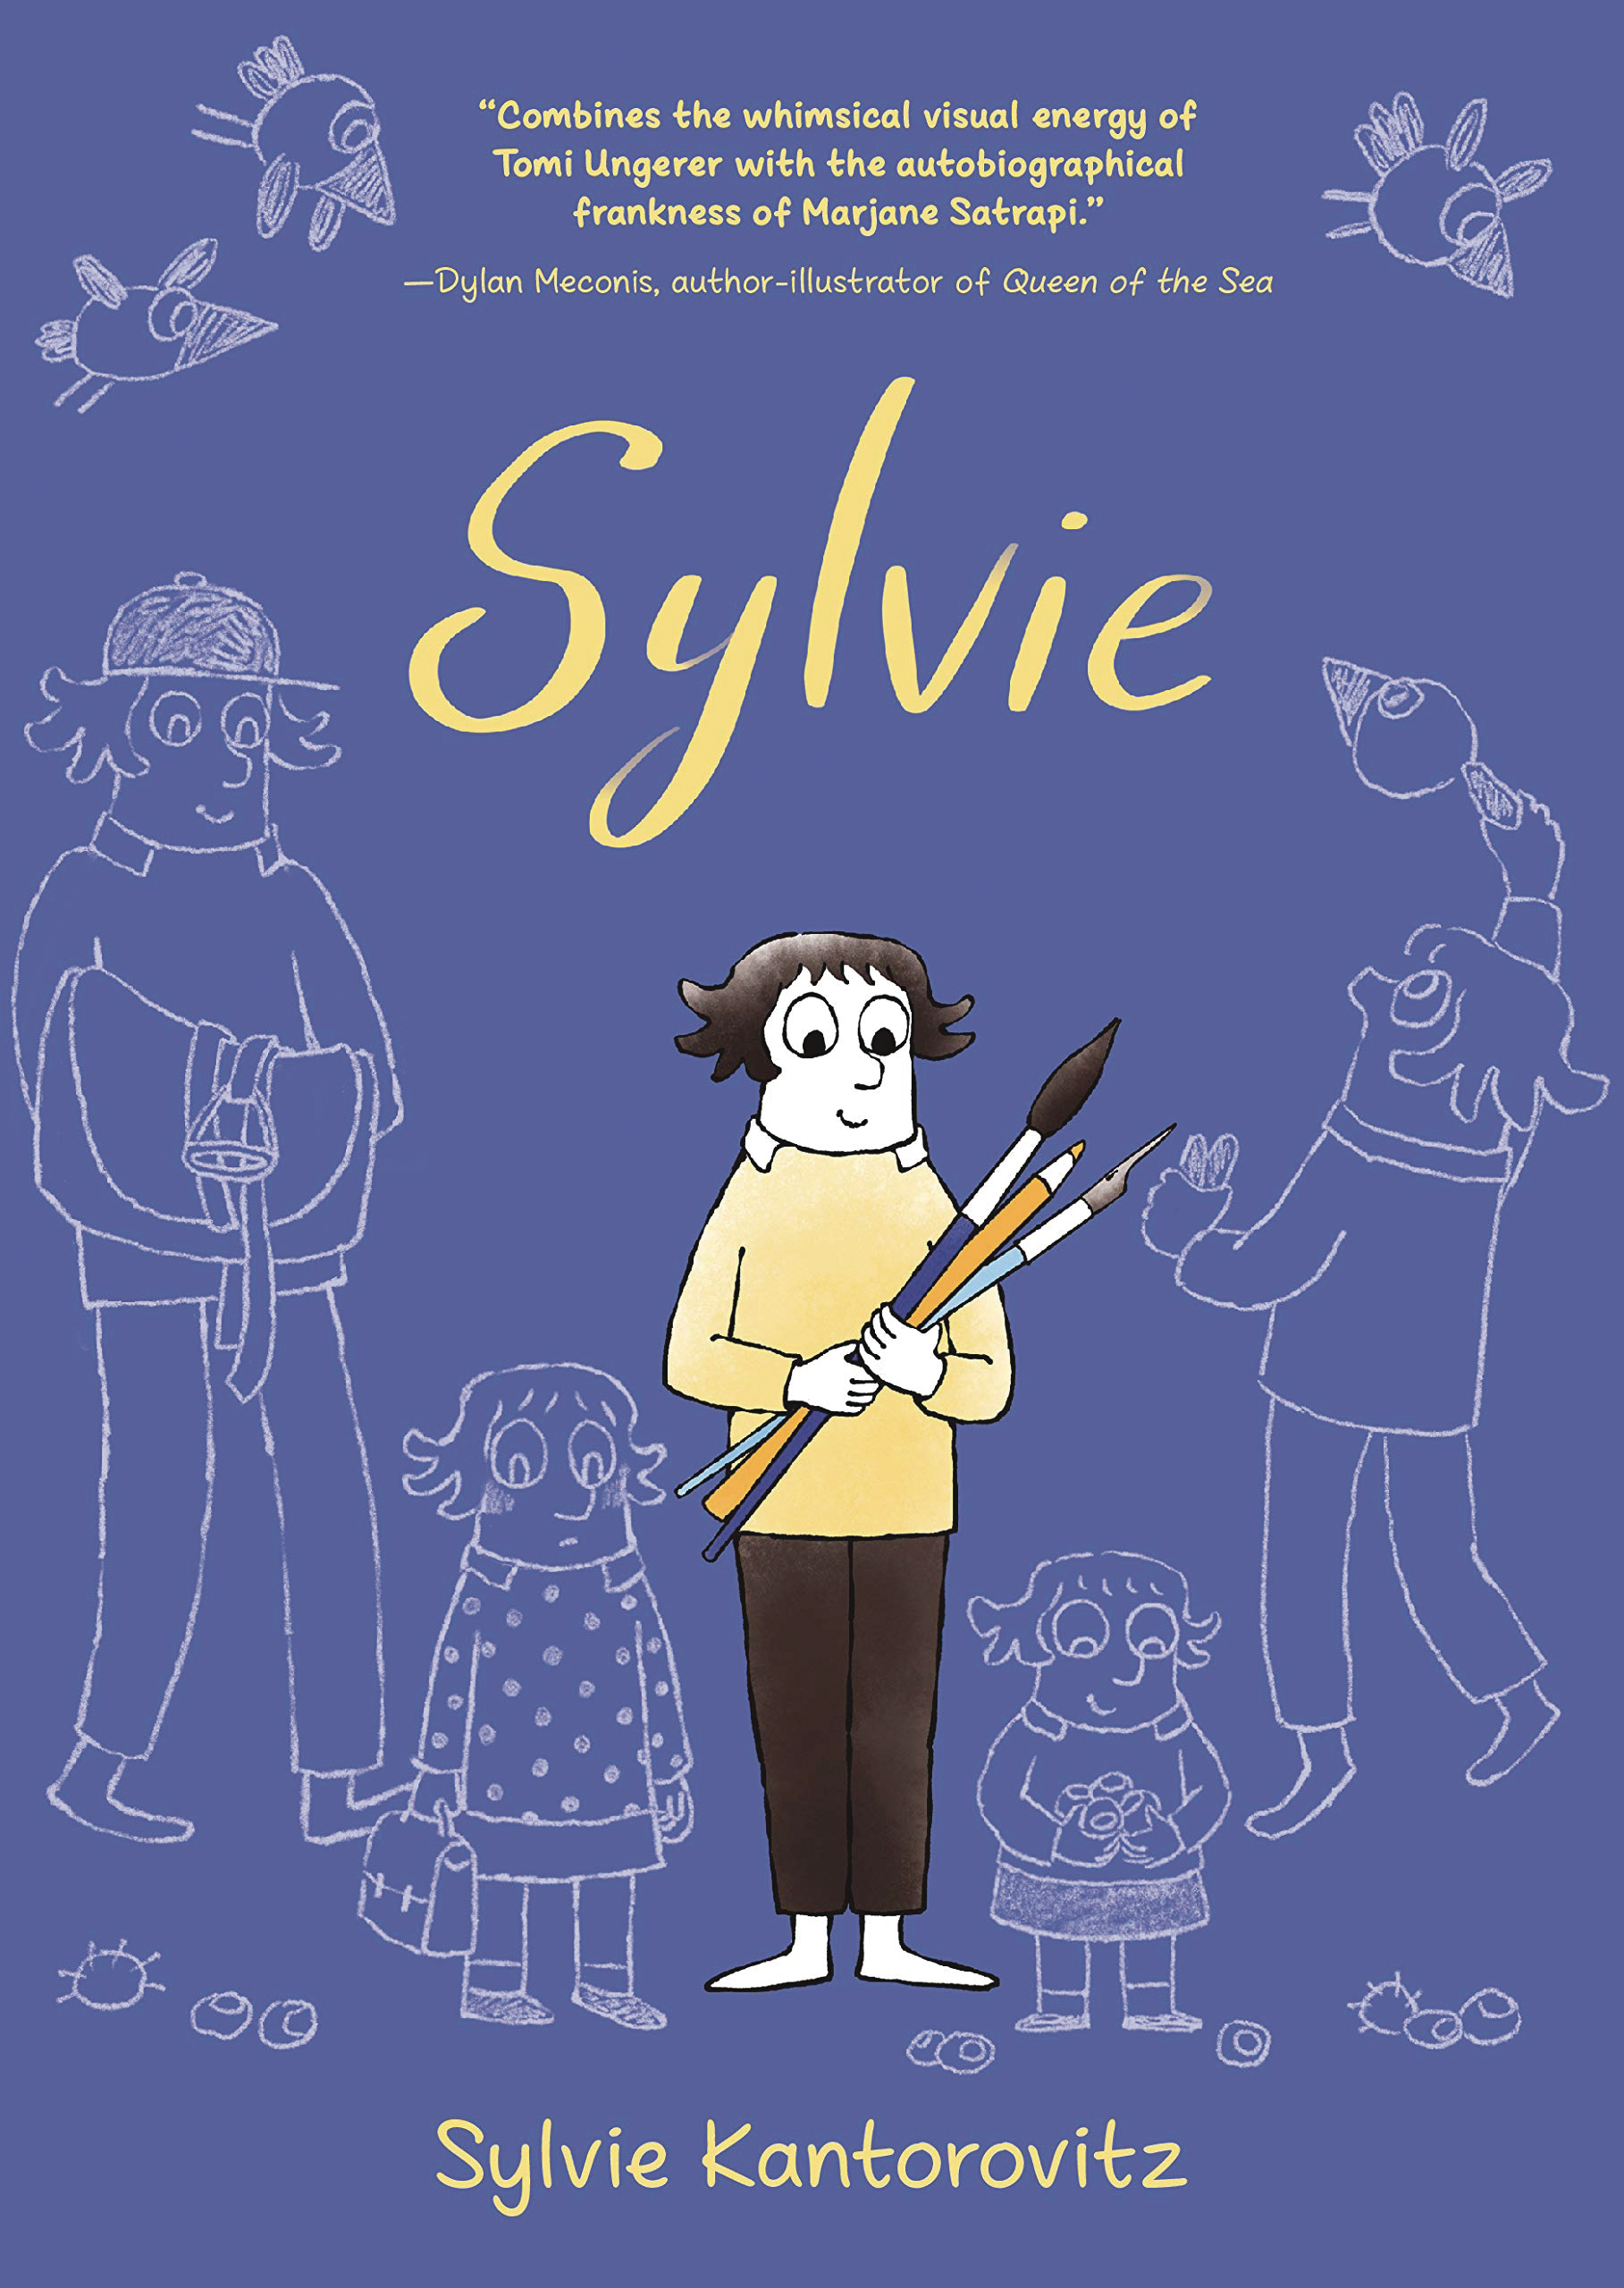 Sylvie Graphic Novel